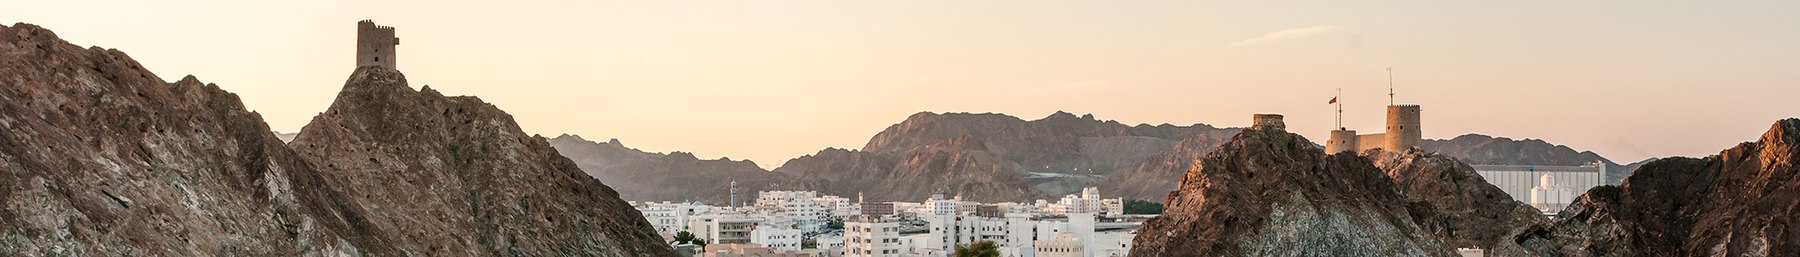 Mutrah Muscat Oman Banner.jpg